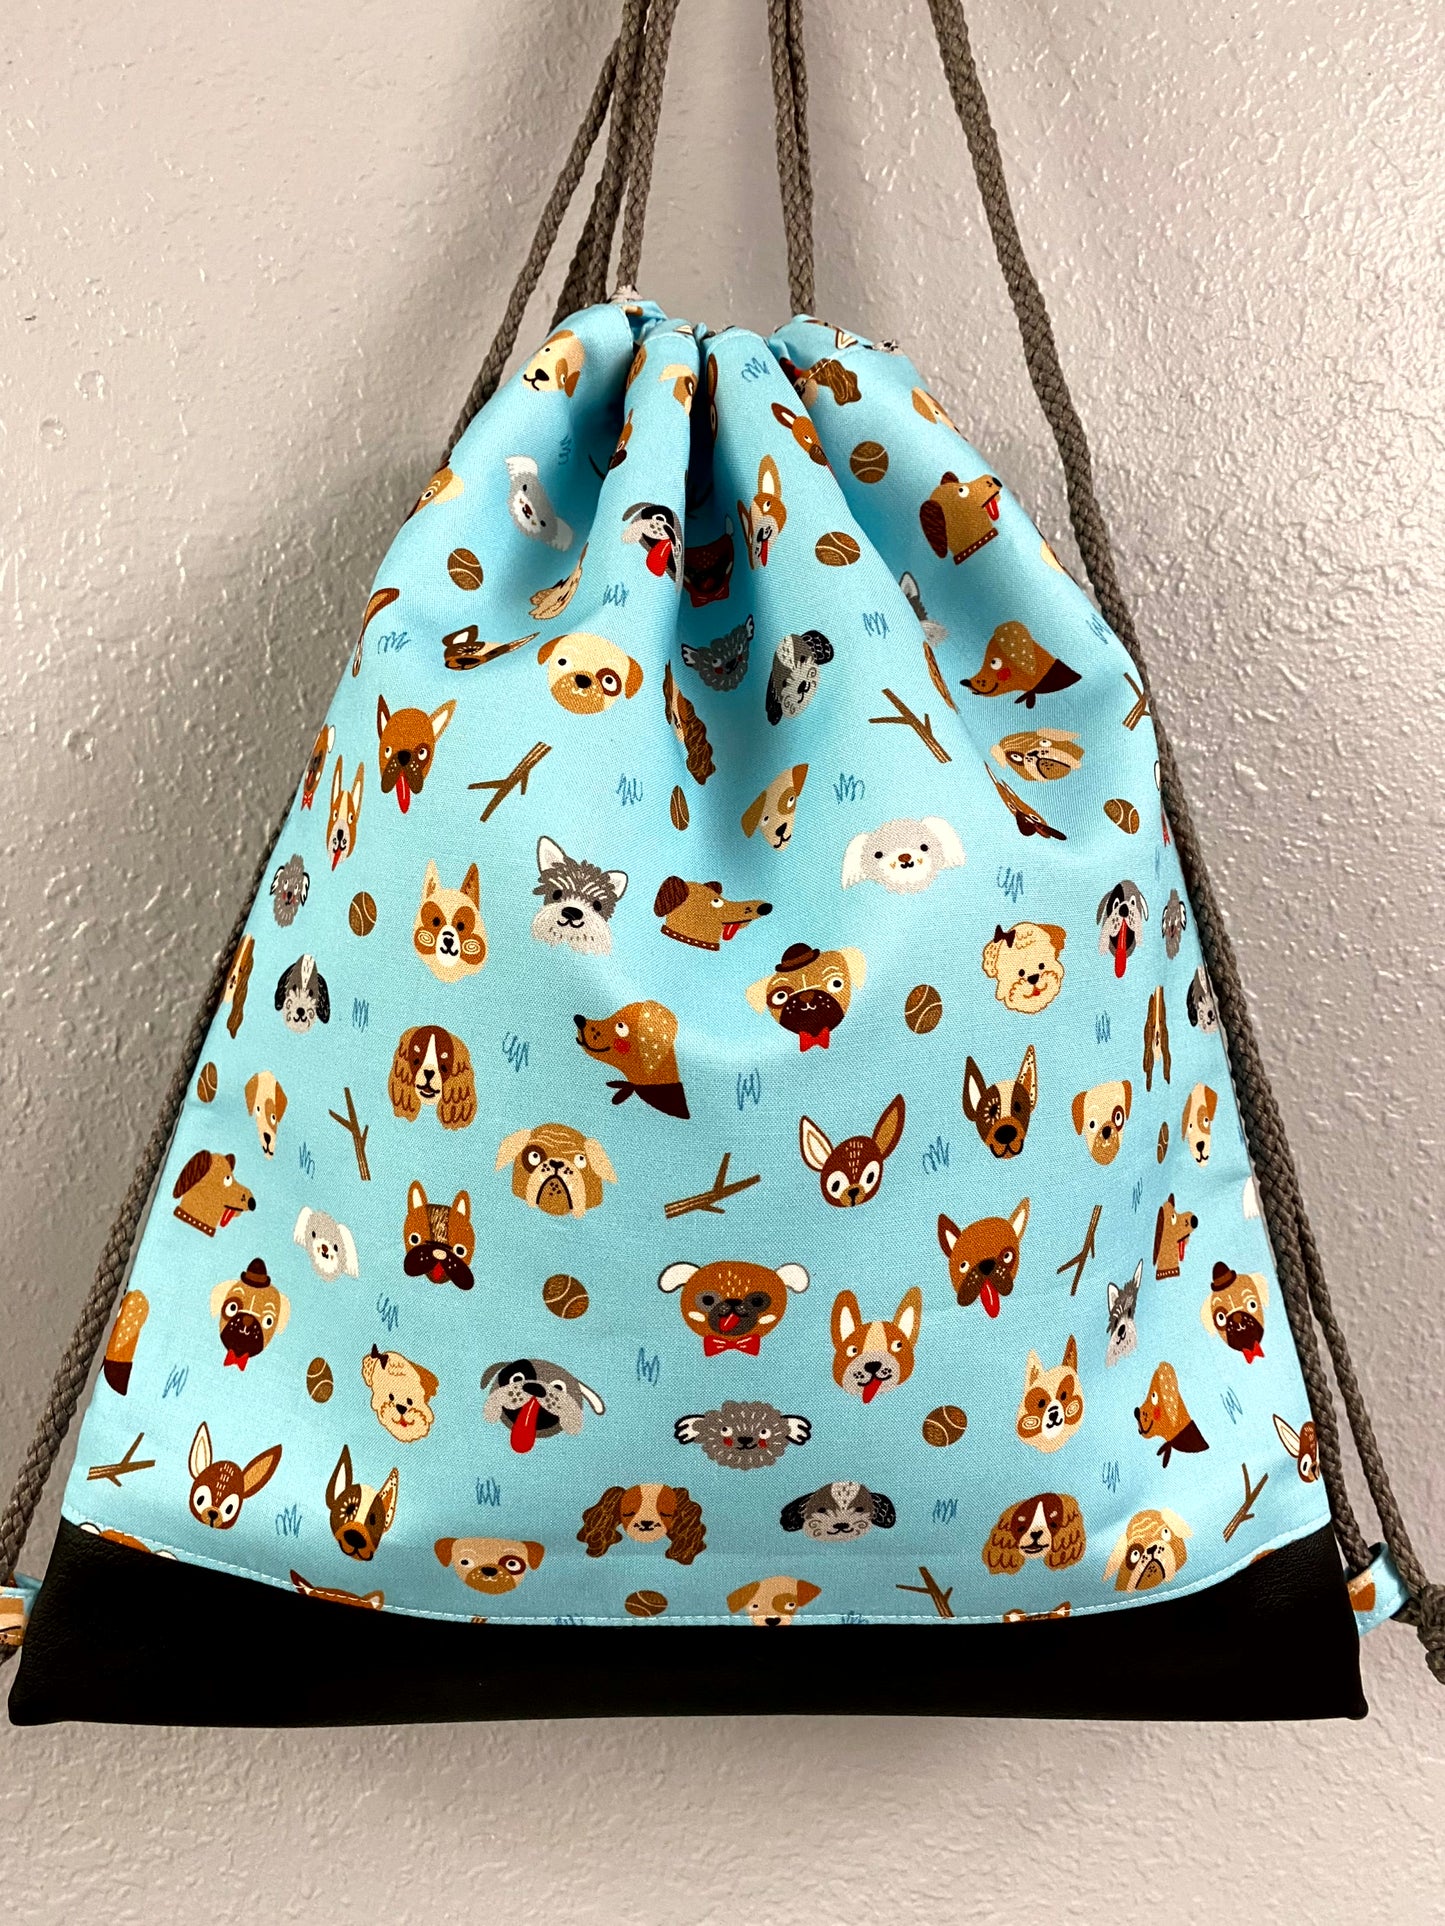 Dog Drawstring Bag - Handmade Drawstring Bag – Drawstring Backpack - On the Go Bag - Overnight Bag